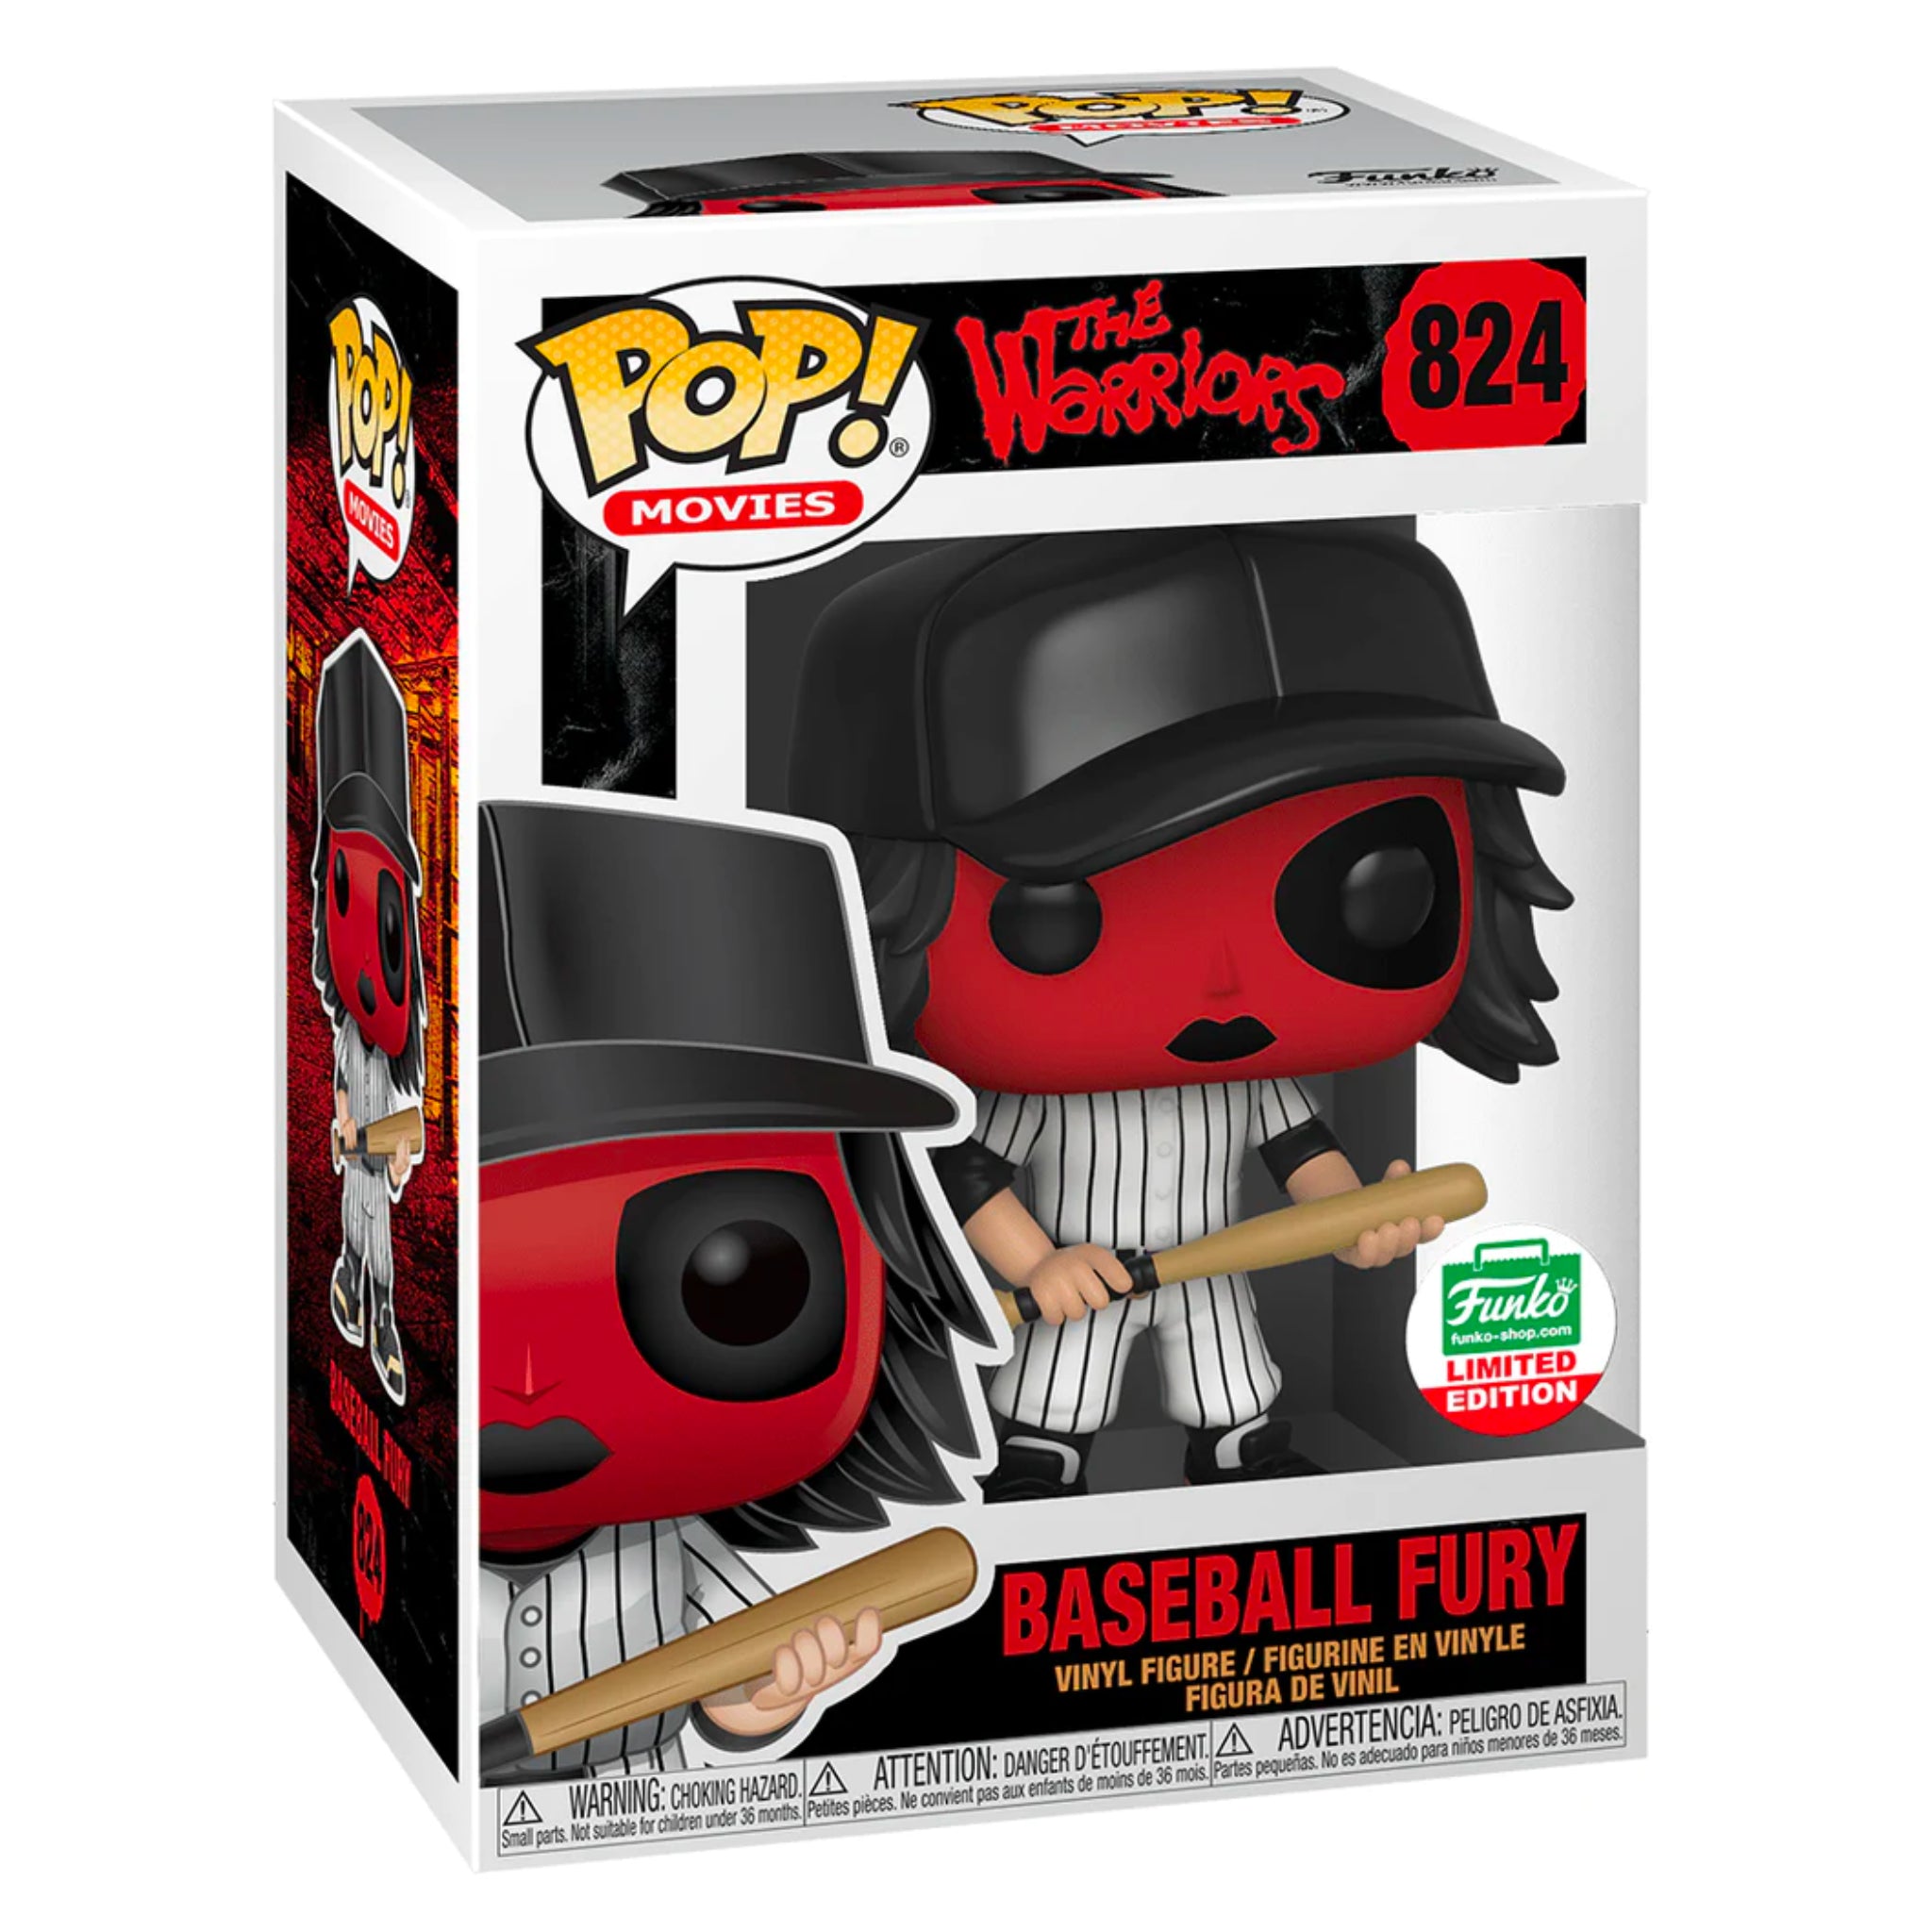 Baseball Fury (Red) Funko Pop! FUNKO EXCLUSIVE